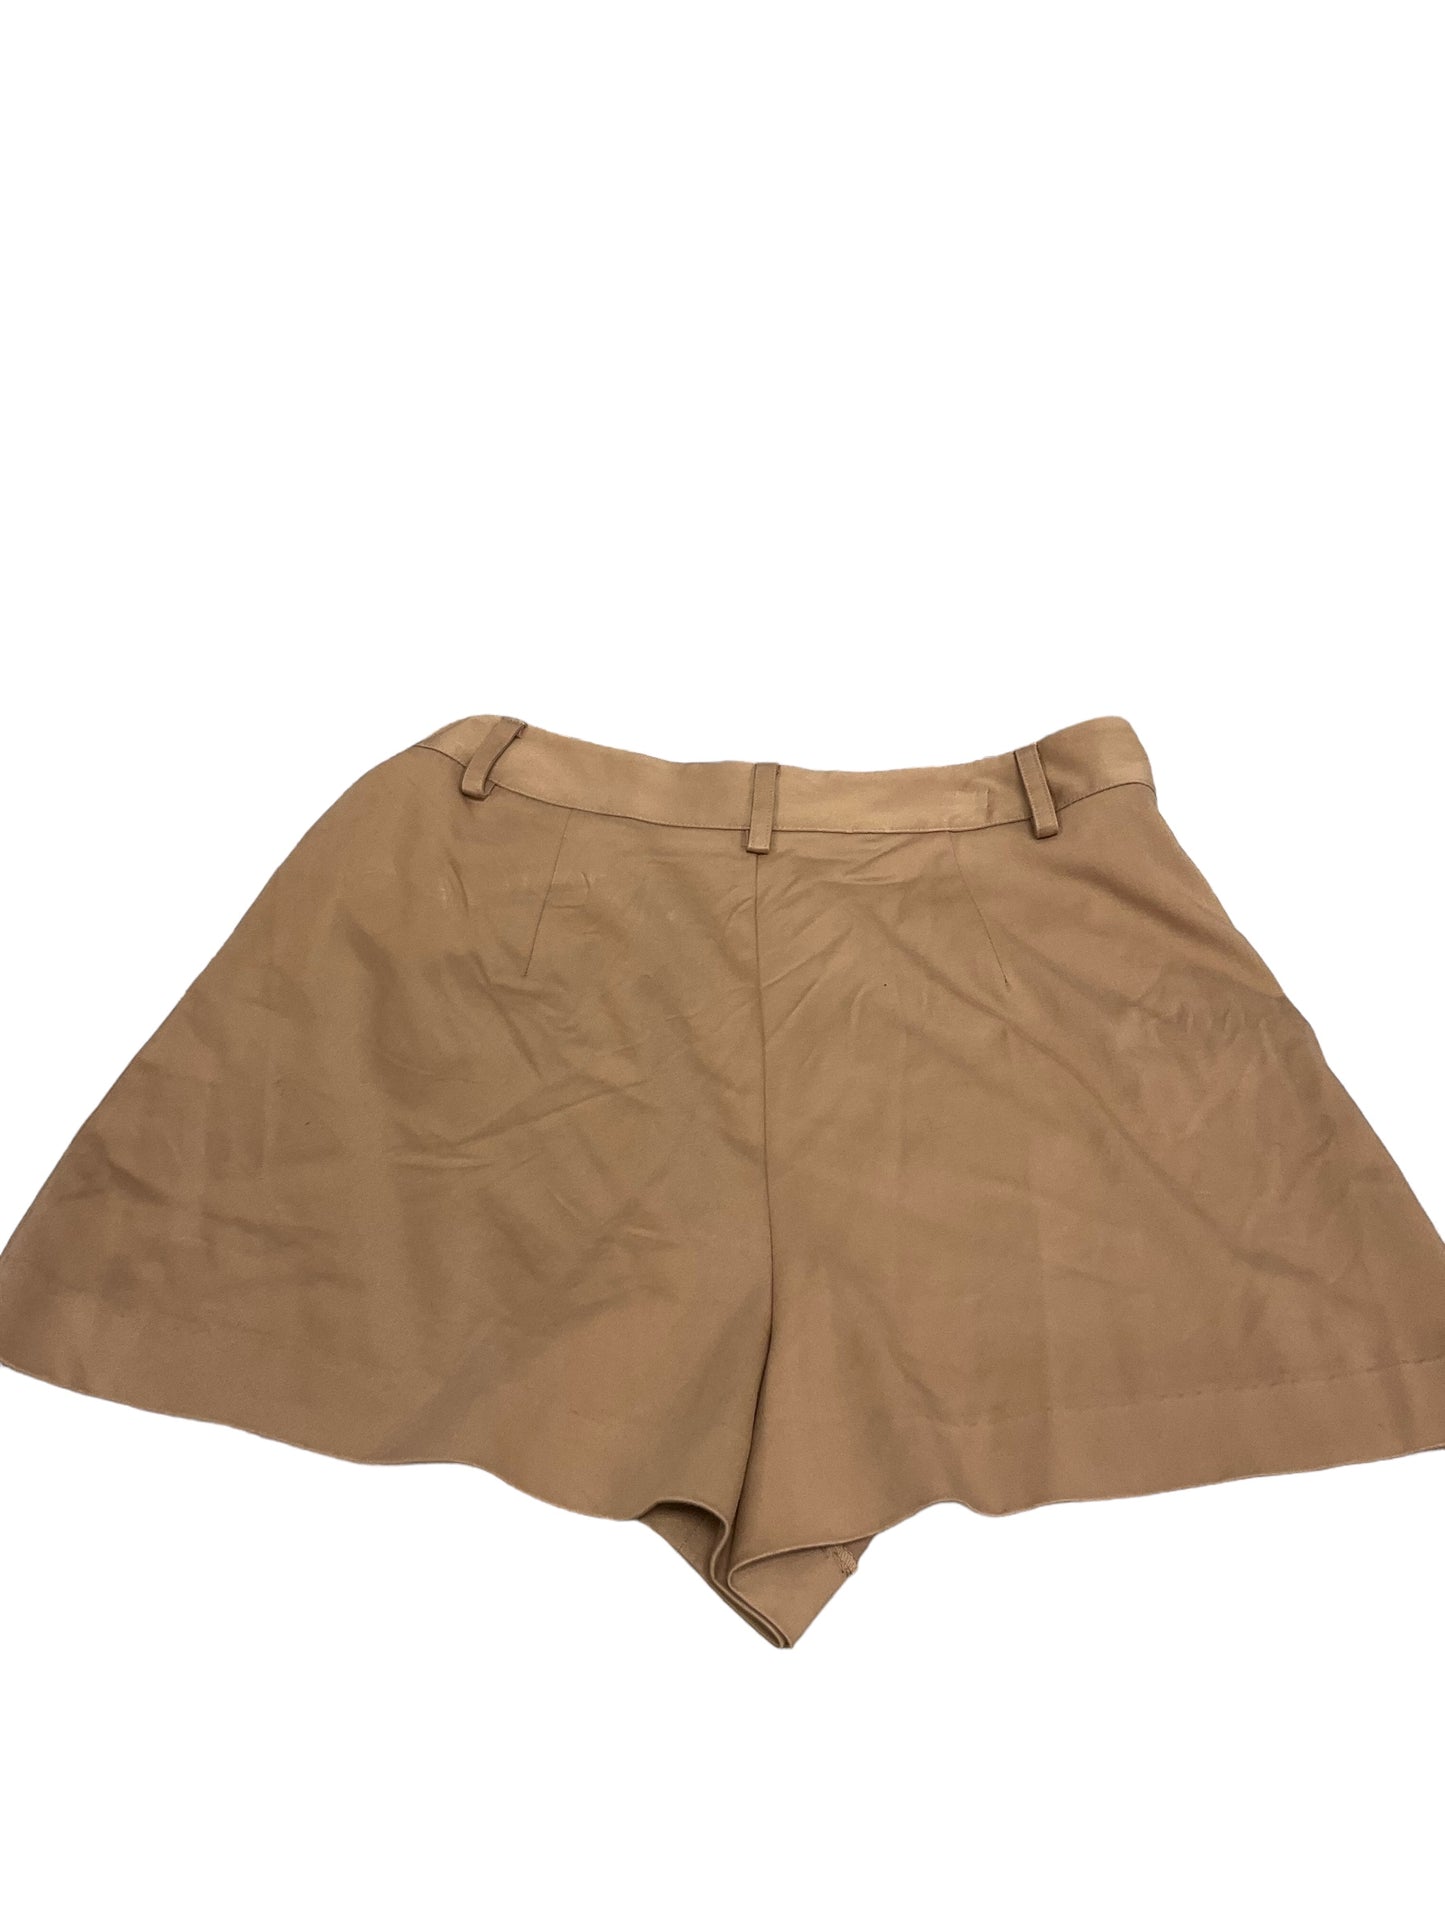 Shorts By Gianni Bini  Size: 10